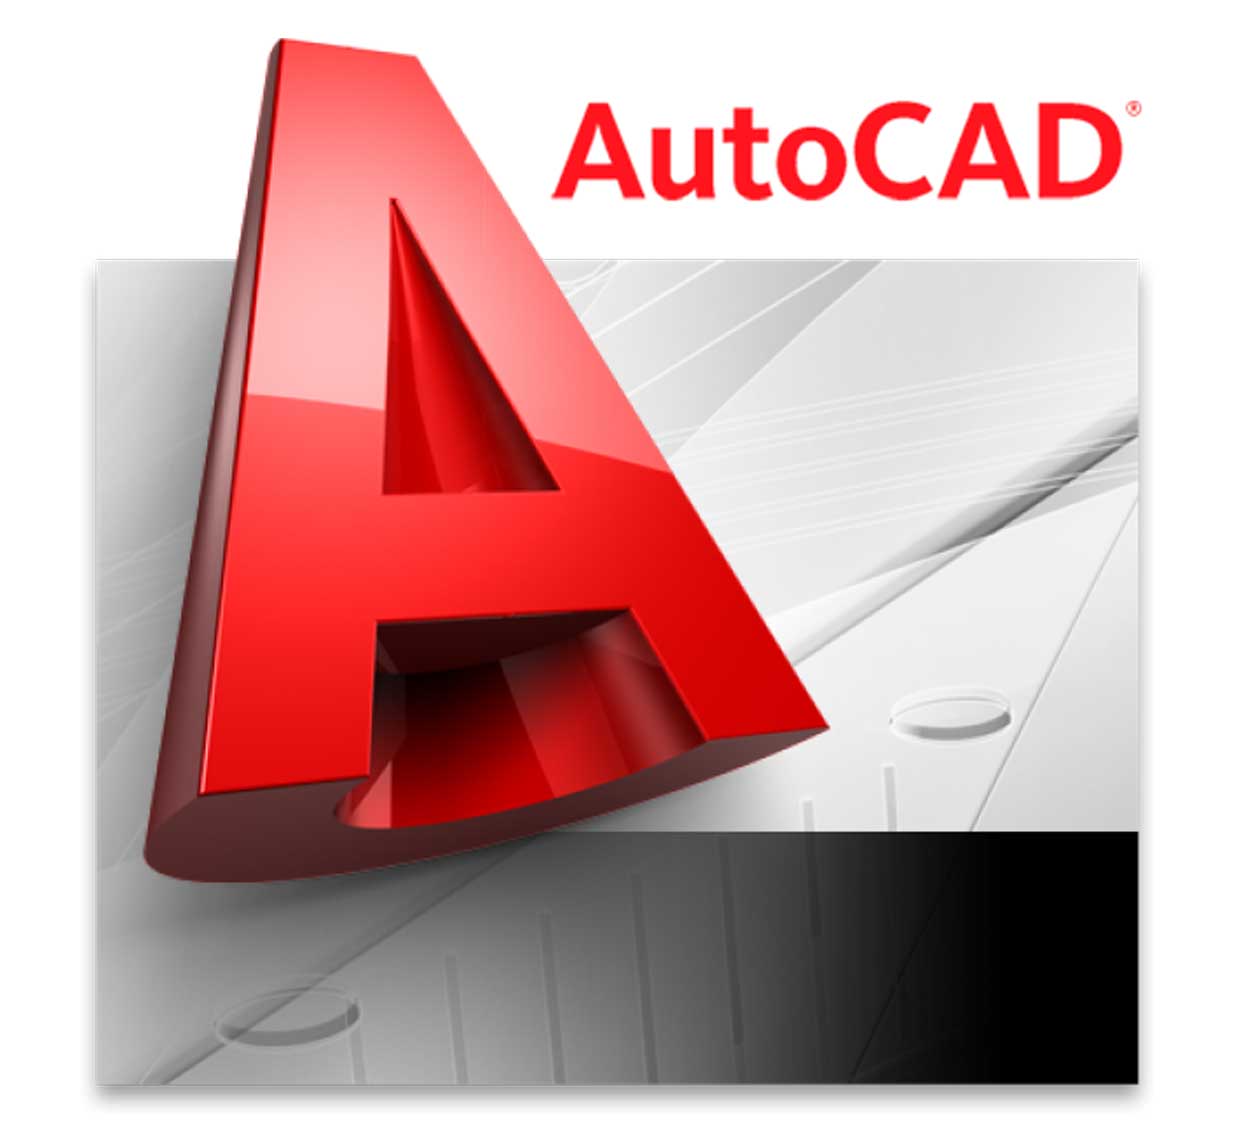 autocad 2014 free download